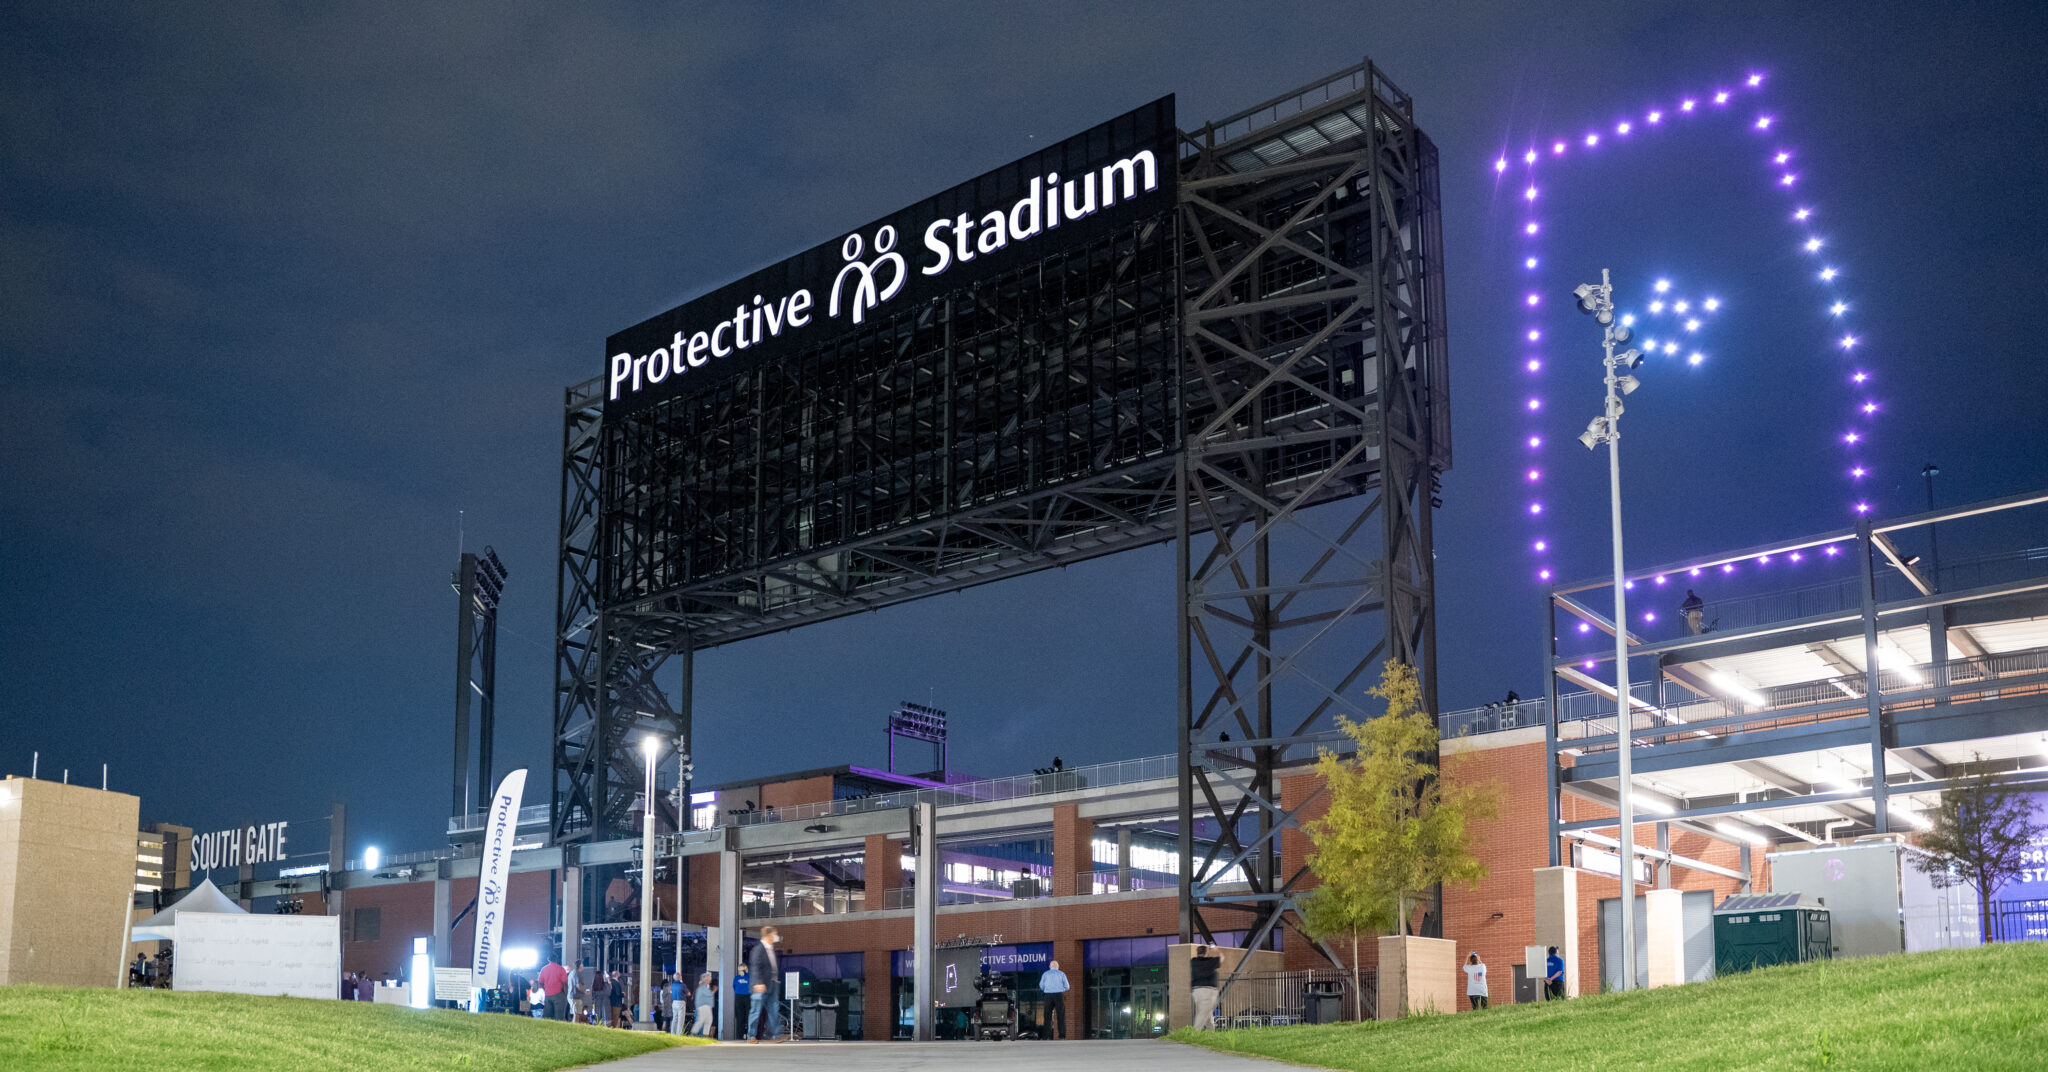 Protective Stadium lights up Birmingham with new sign [Photos]